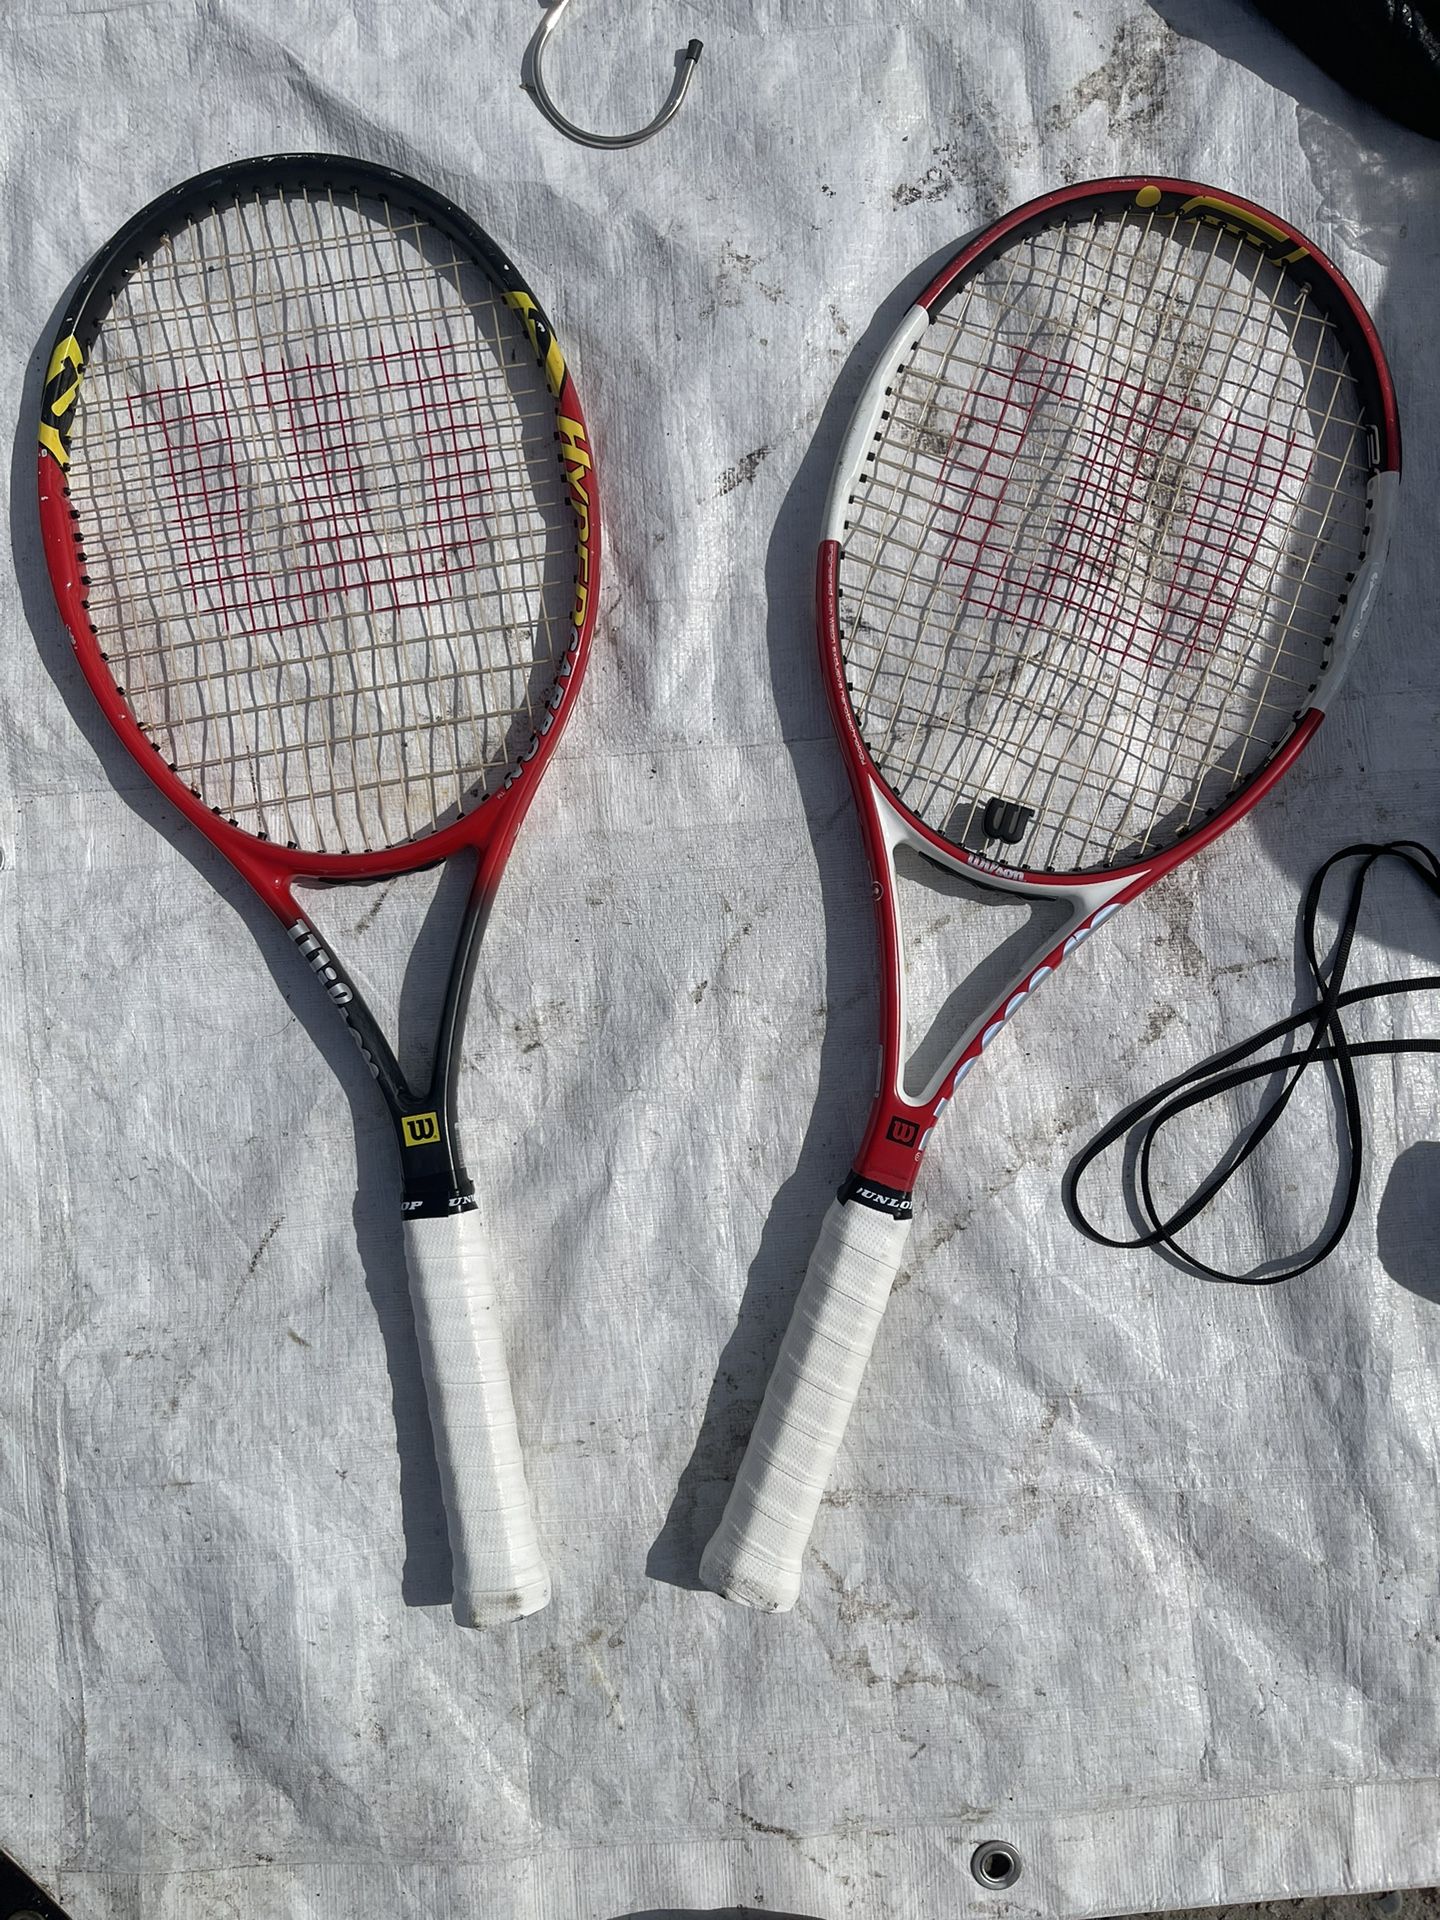 2 Wilson Tennis Rackets Excellent Condition 